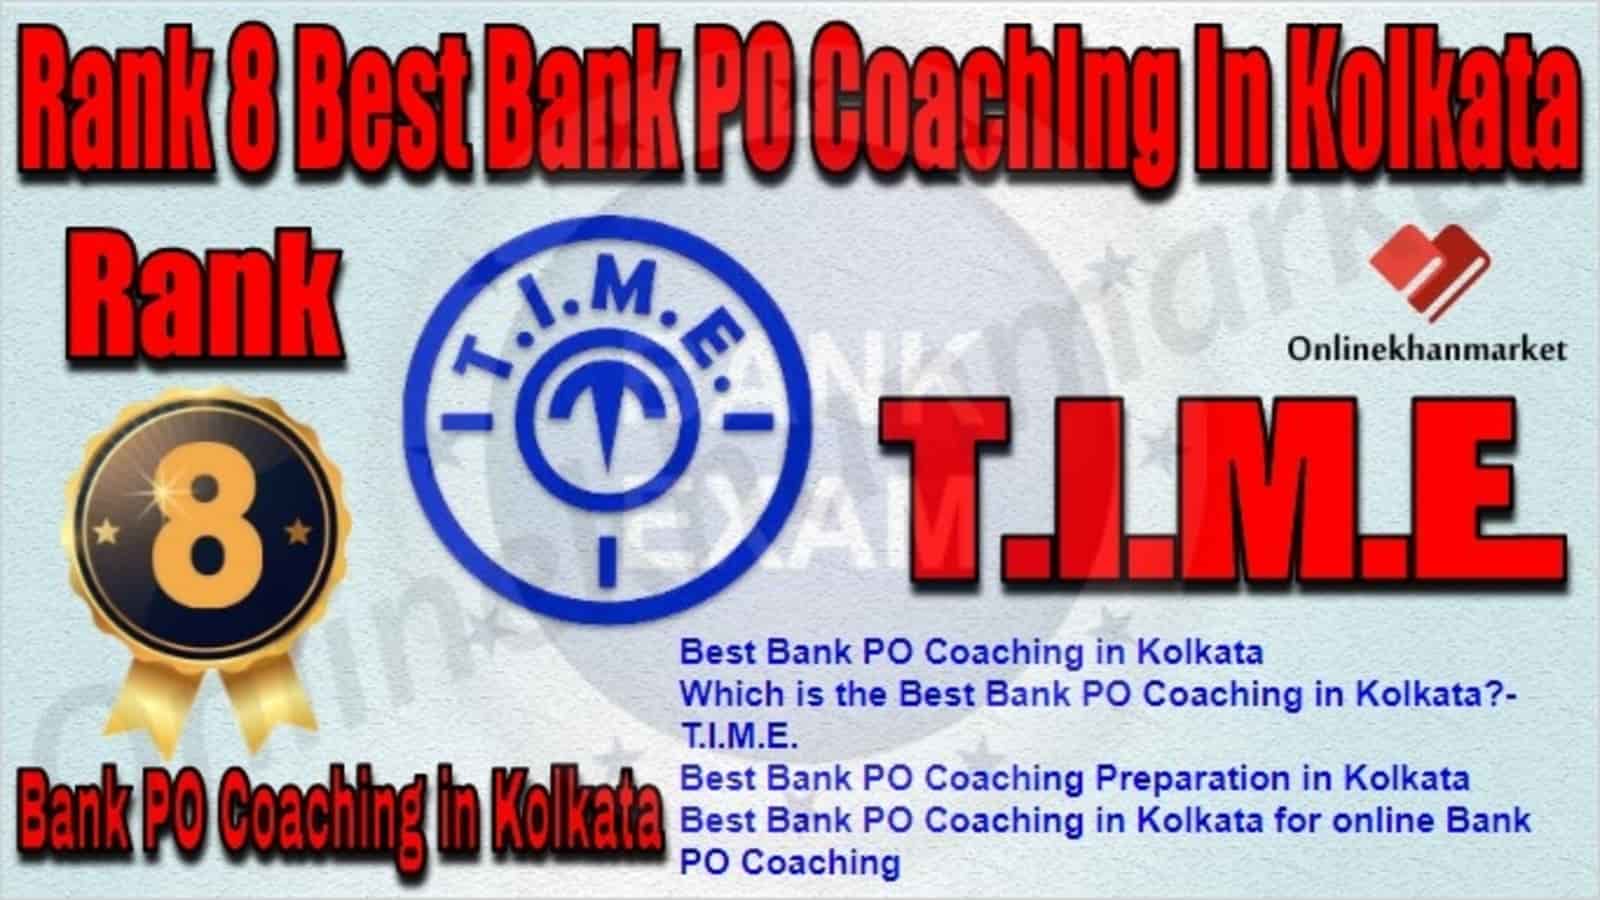 Rank 8 Best Bank PO Coaching in Kolkata